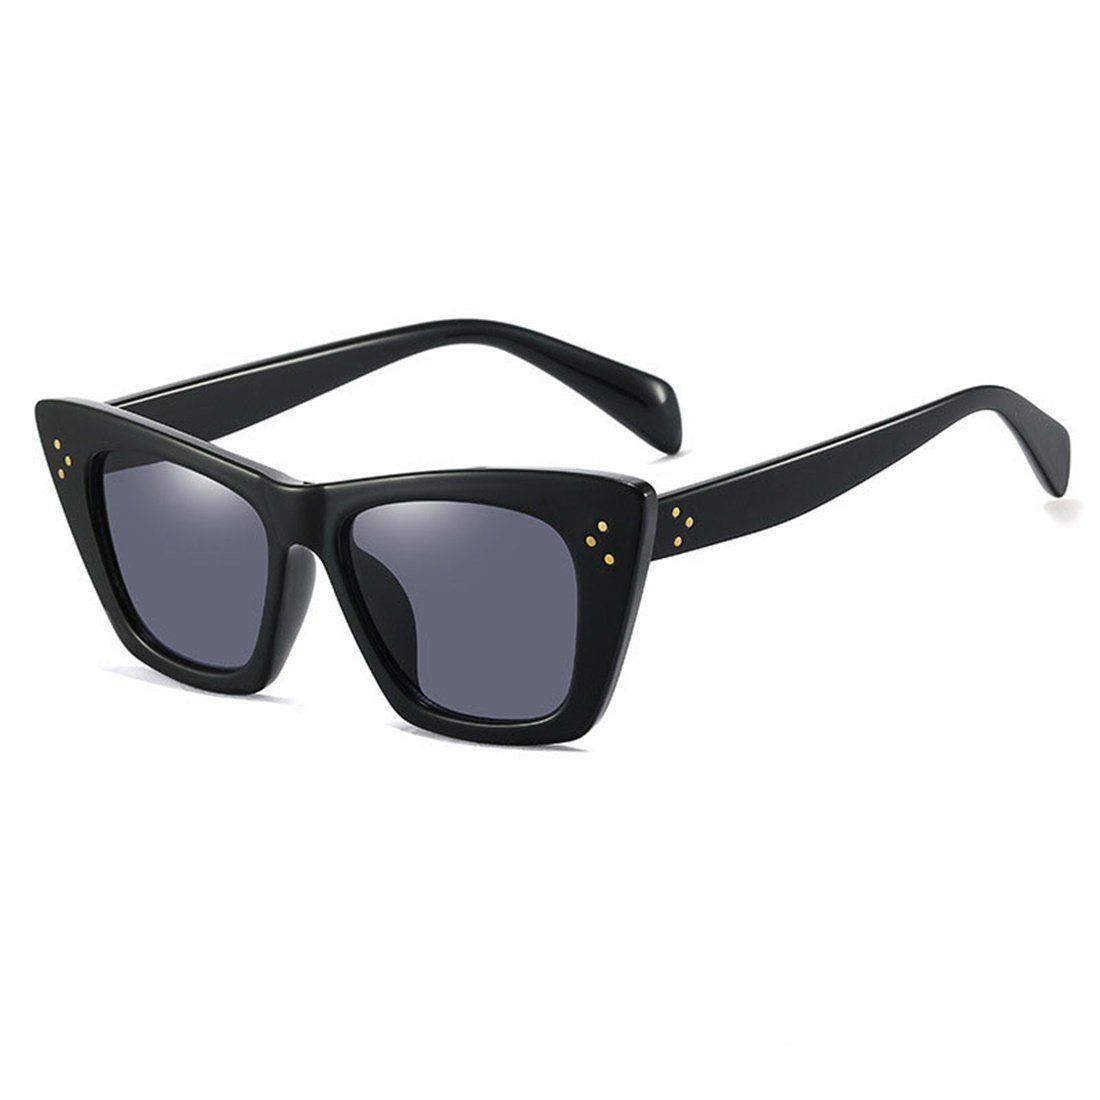 Sonnenbrillen Modische DÖRÖY Frauen, Sonnenbrillen Katzenaugenbrillen, Sonnenbrille für